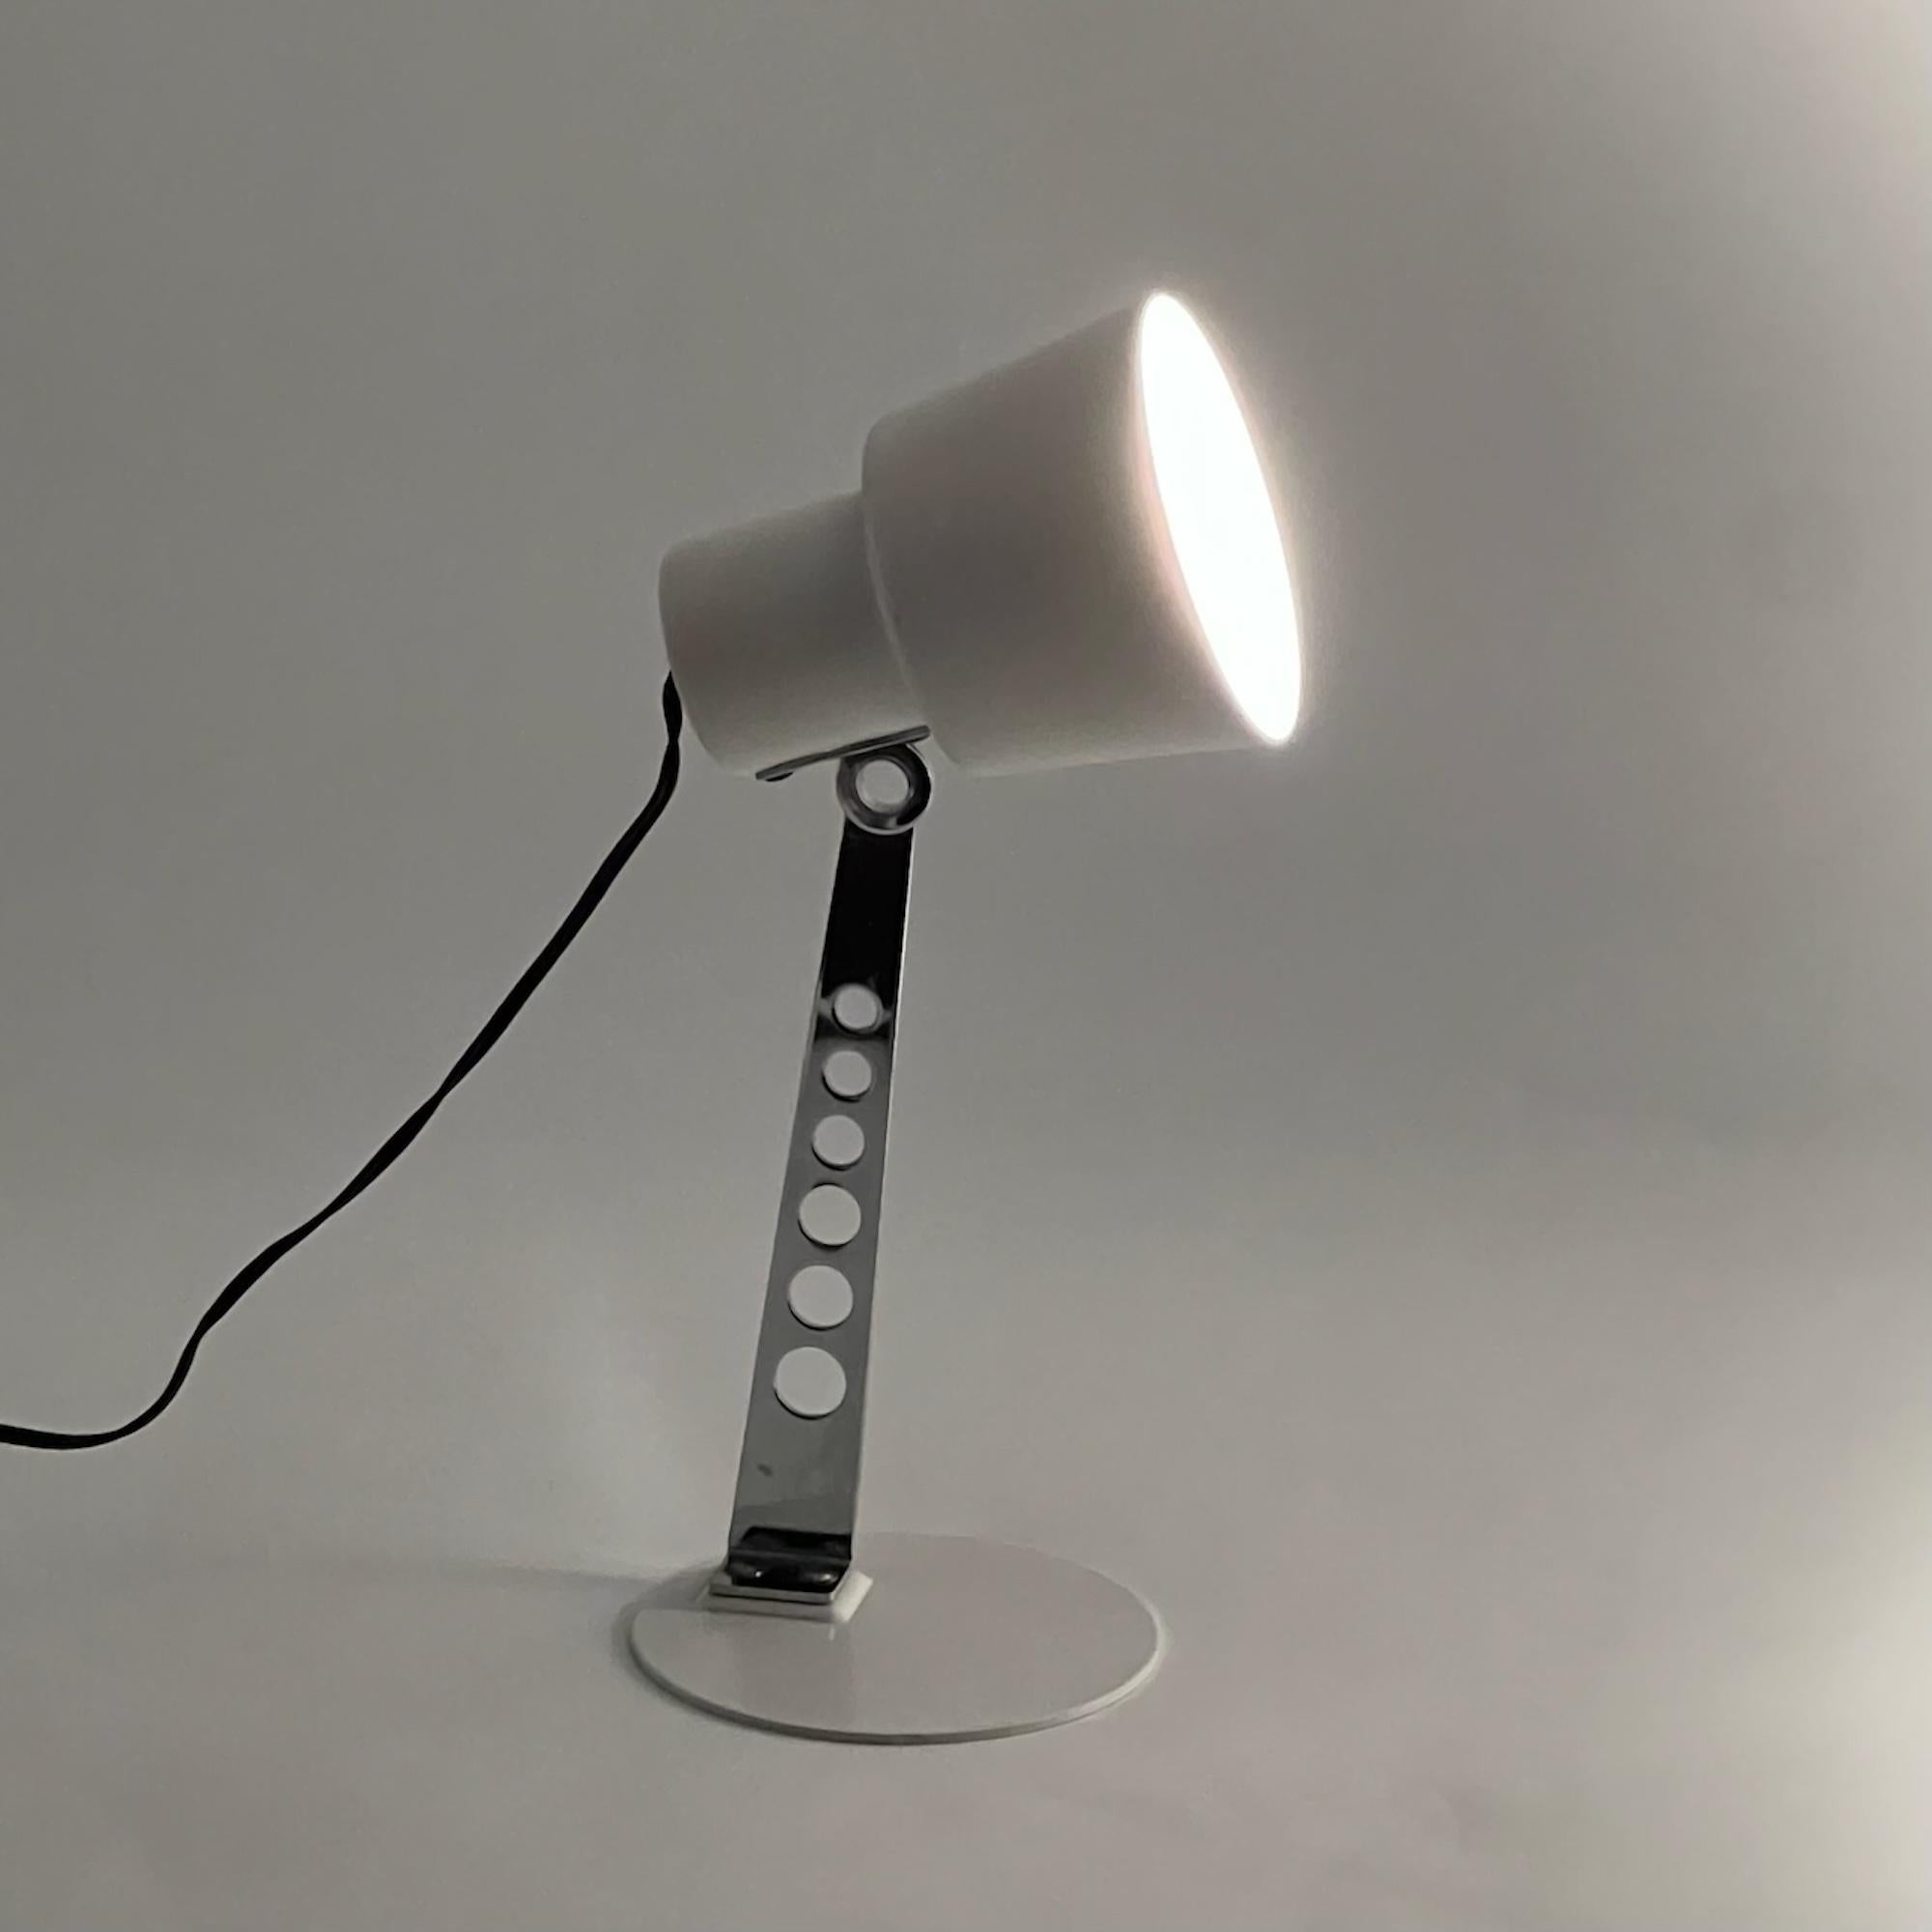 Late 20th Century Vintage Targetti Sankey Desk Lamp - Minimalist 1970s Italian Design